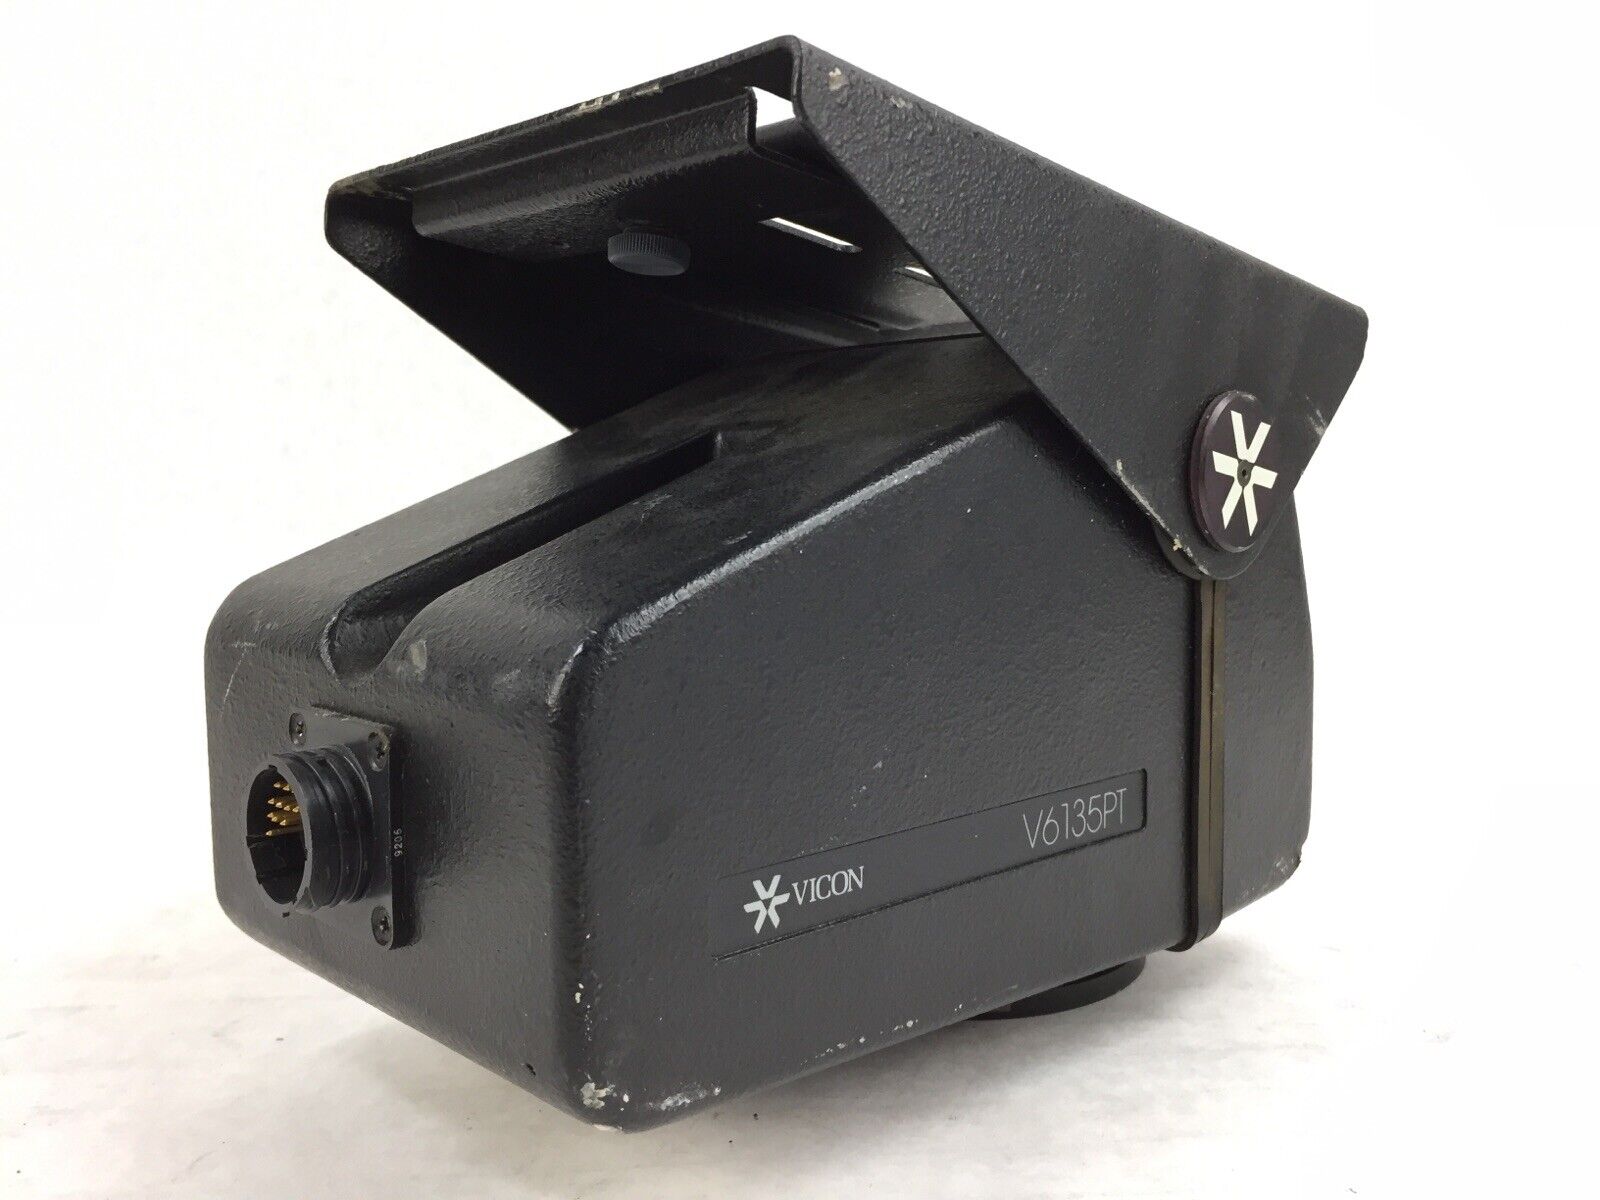 Vicon V6135PT Camera Mount